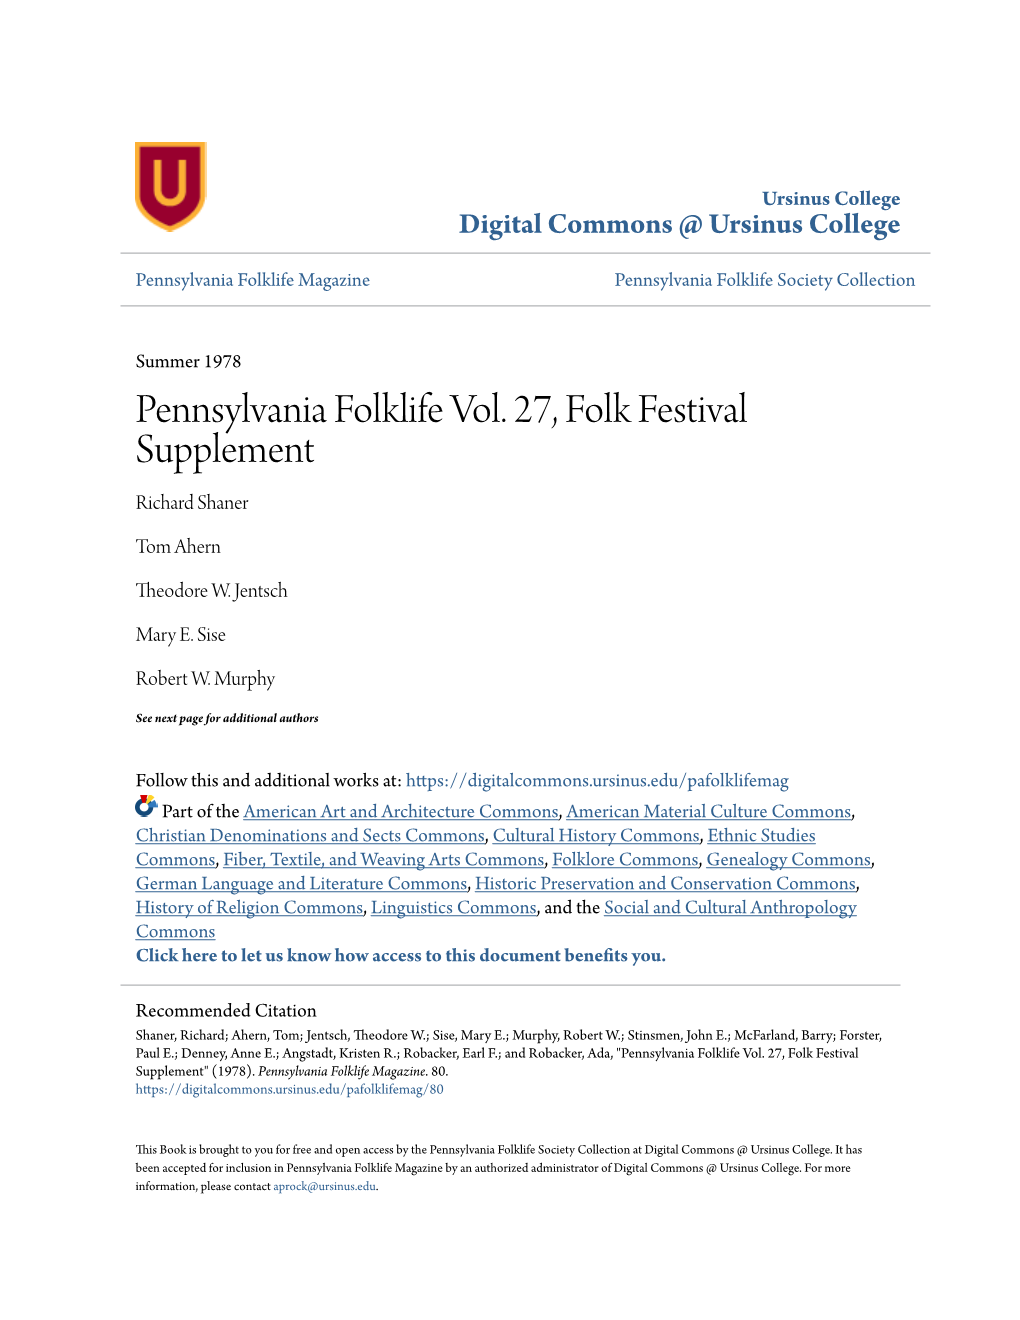 Pennsylvania Folklife Vol. 27, Folk Festival Supplement Richard Shaner